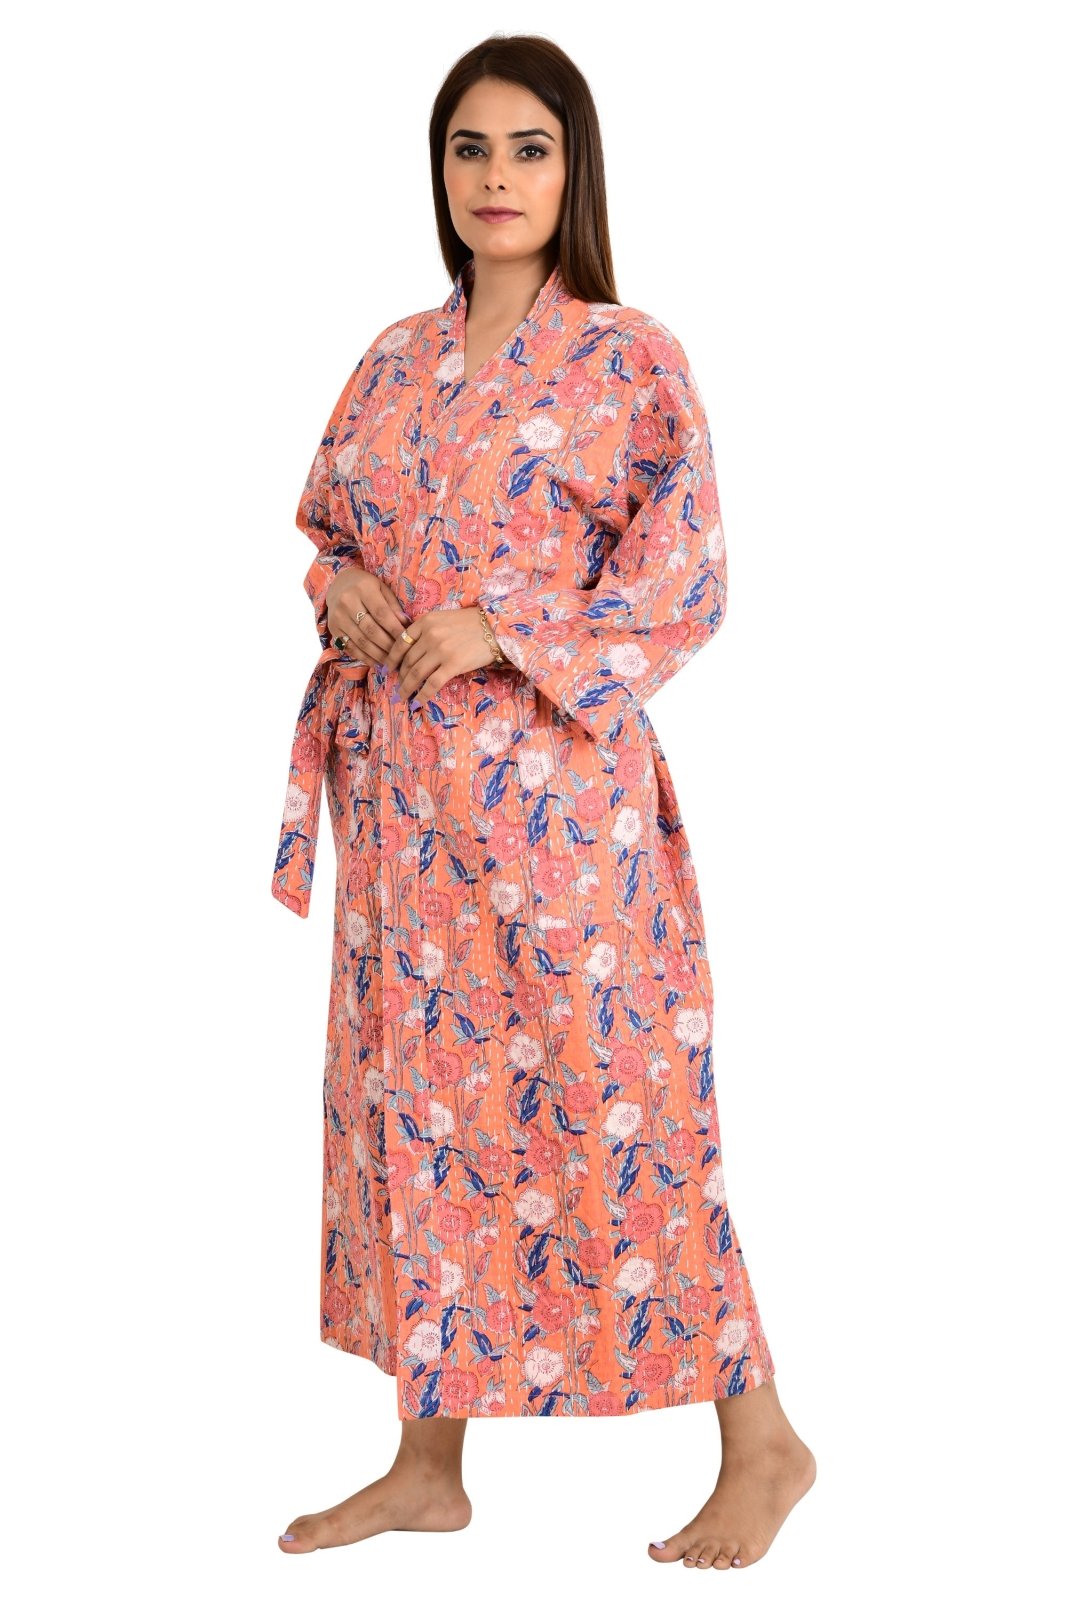 Kantha Stitch 100% Cotton Reversible Long Kimono Women Jacket | Handmade Stitch Robe | Unisex Gift | Peach Floral Print - The Eastern Loom